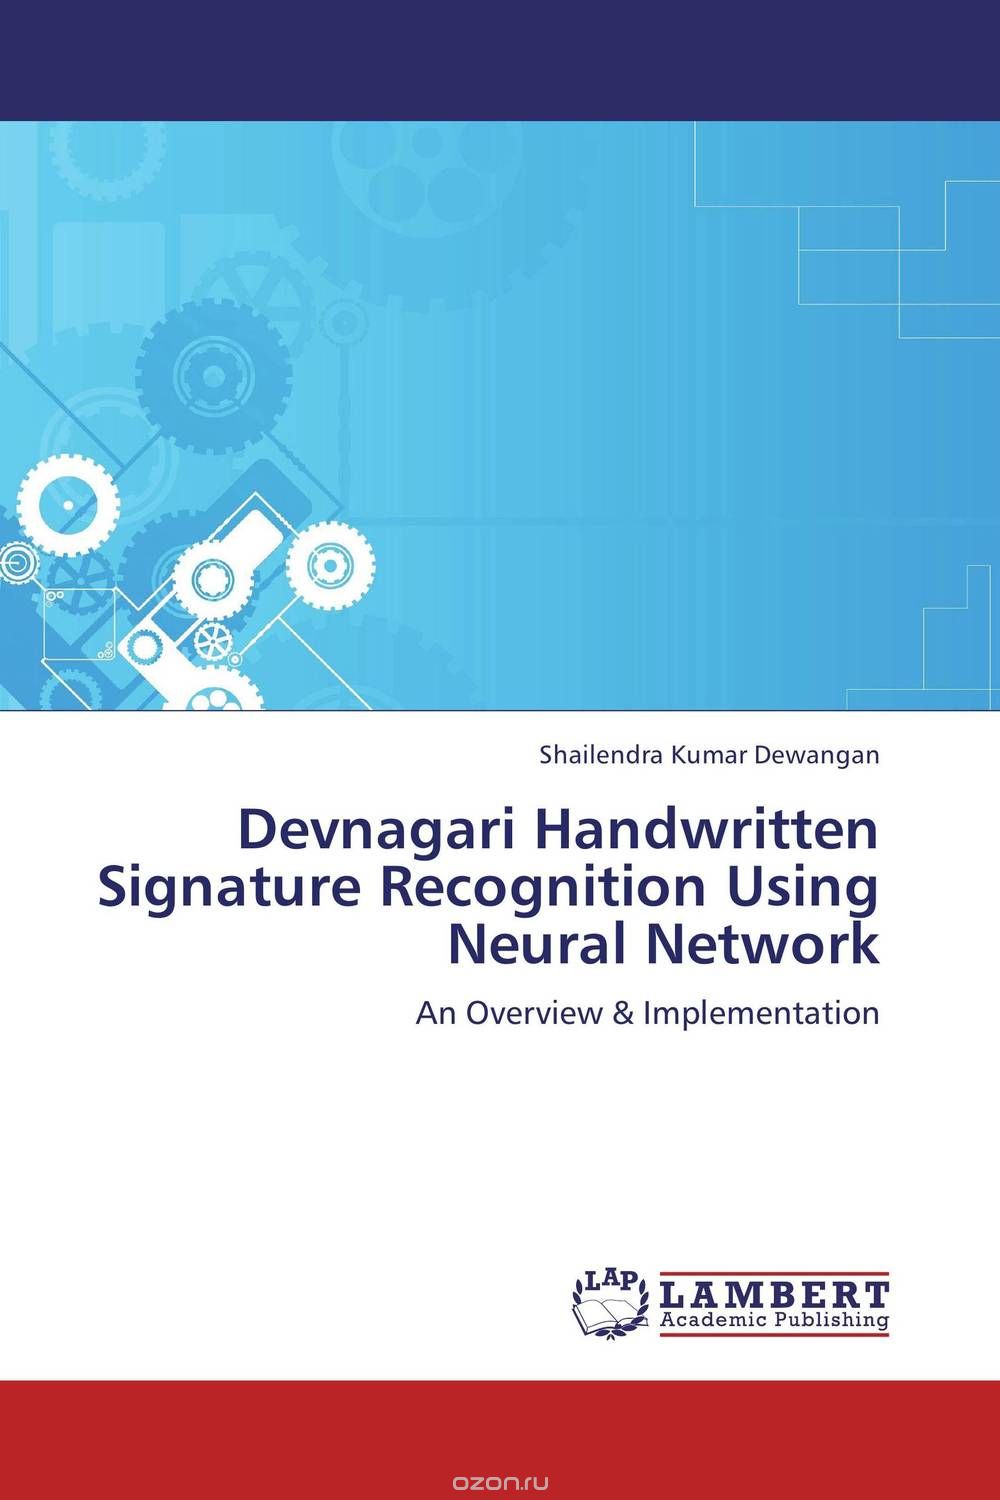 Скачать книгу "Devnagari Handwritten Signature Recognition Using Neural Network"